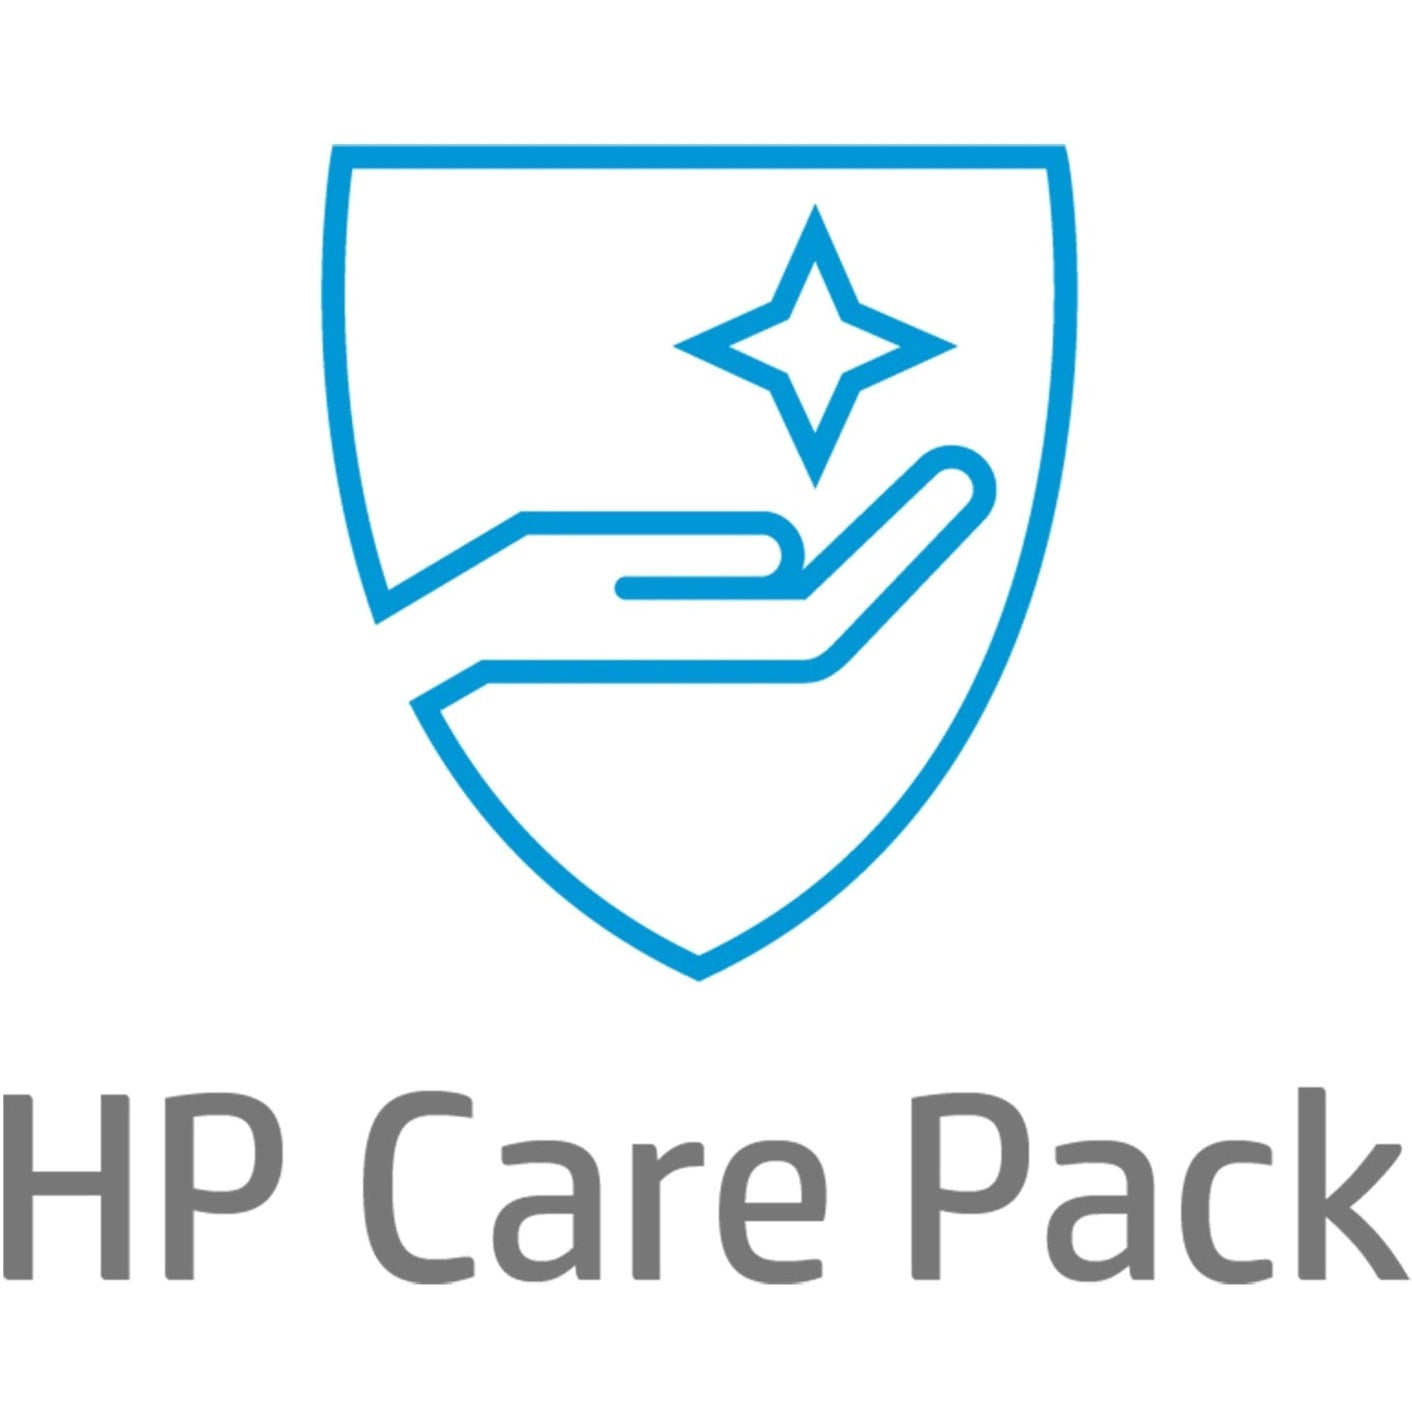 HP Care Pack - 4 Year - Warranty (U7860E)